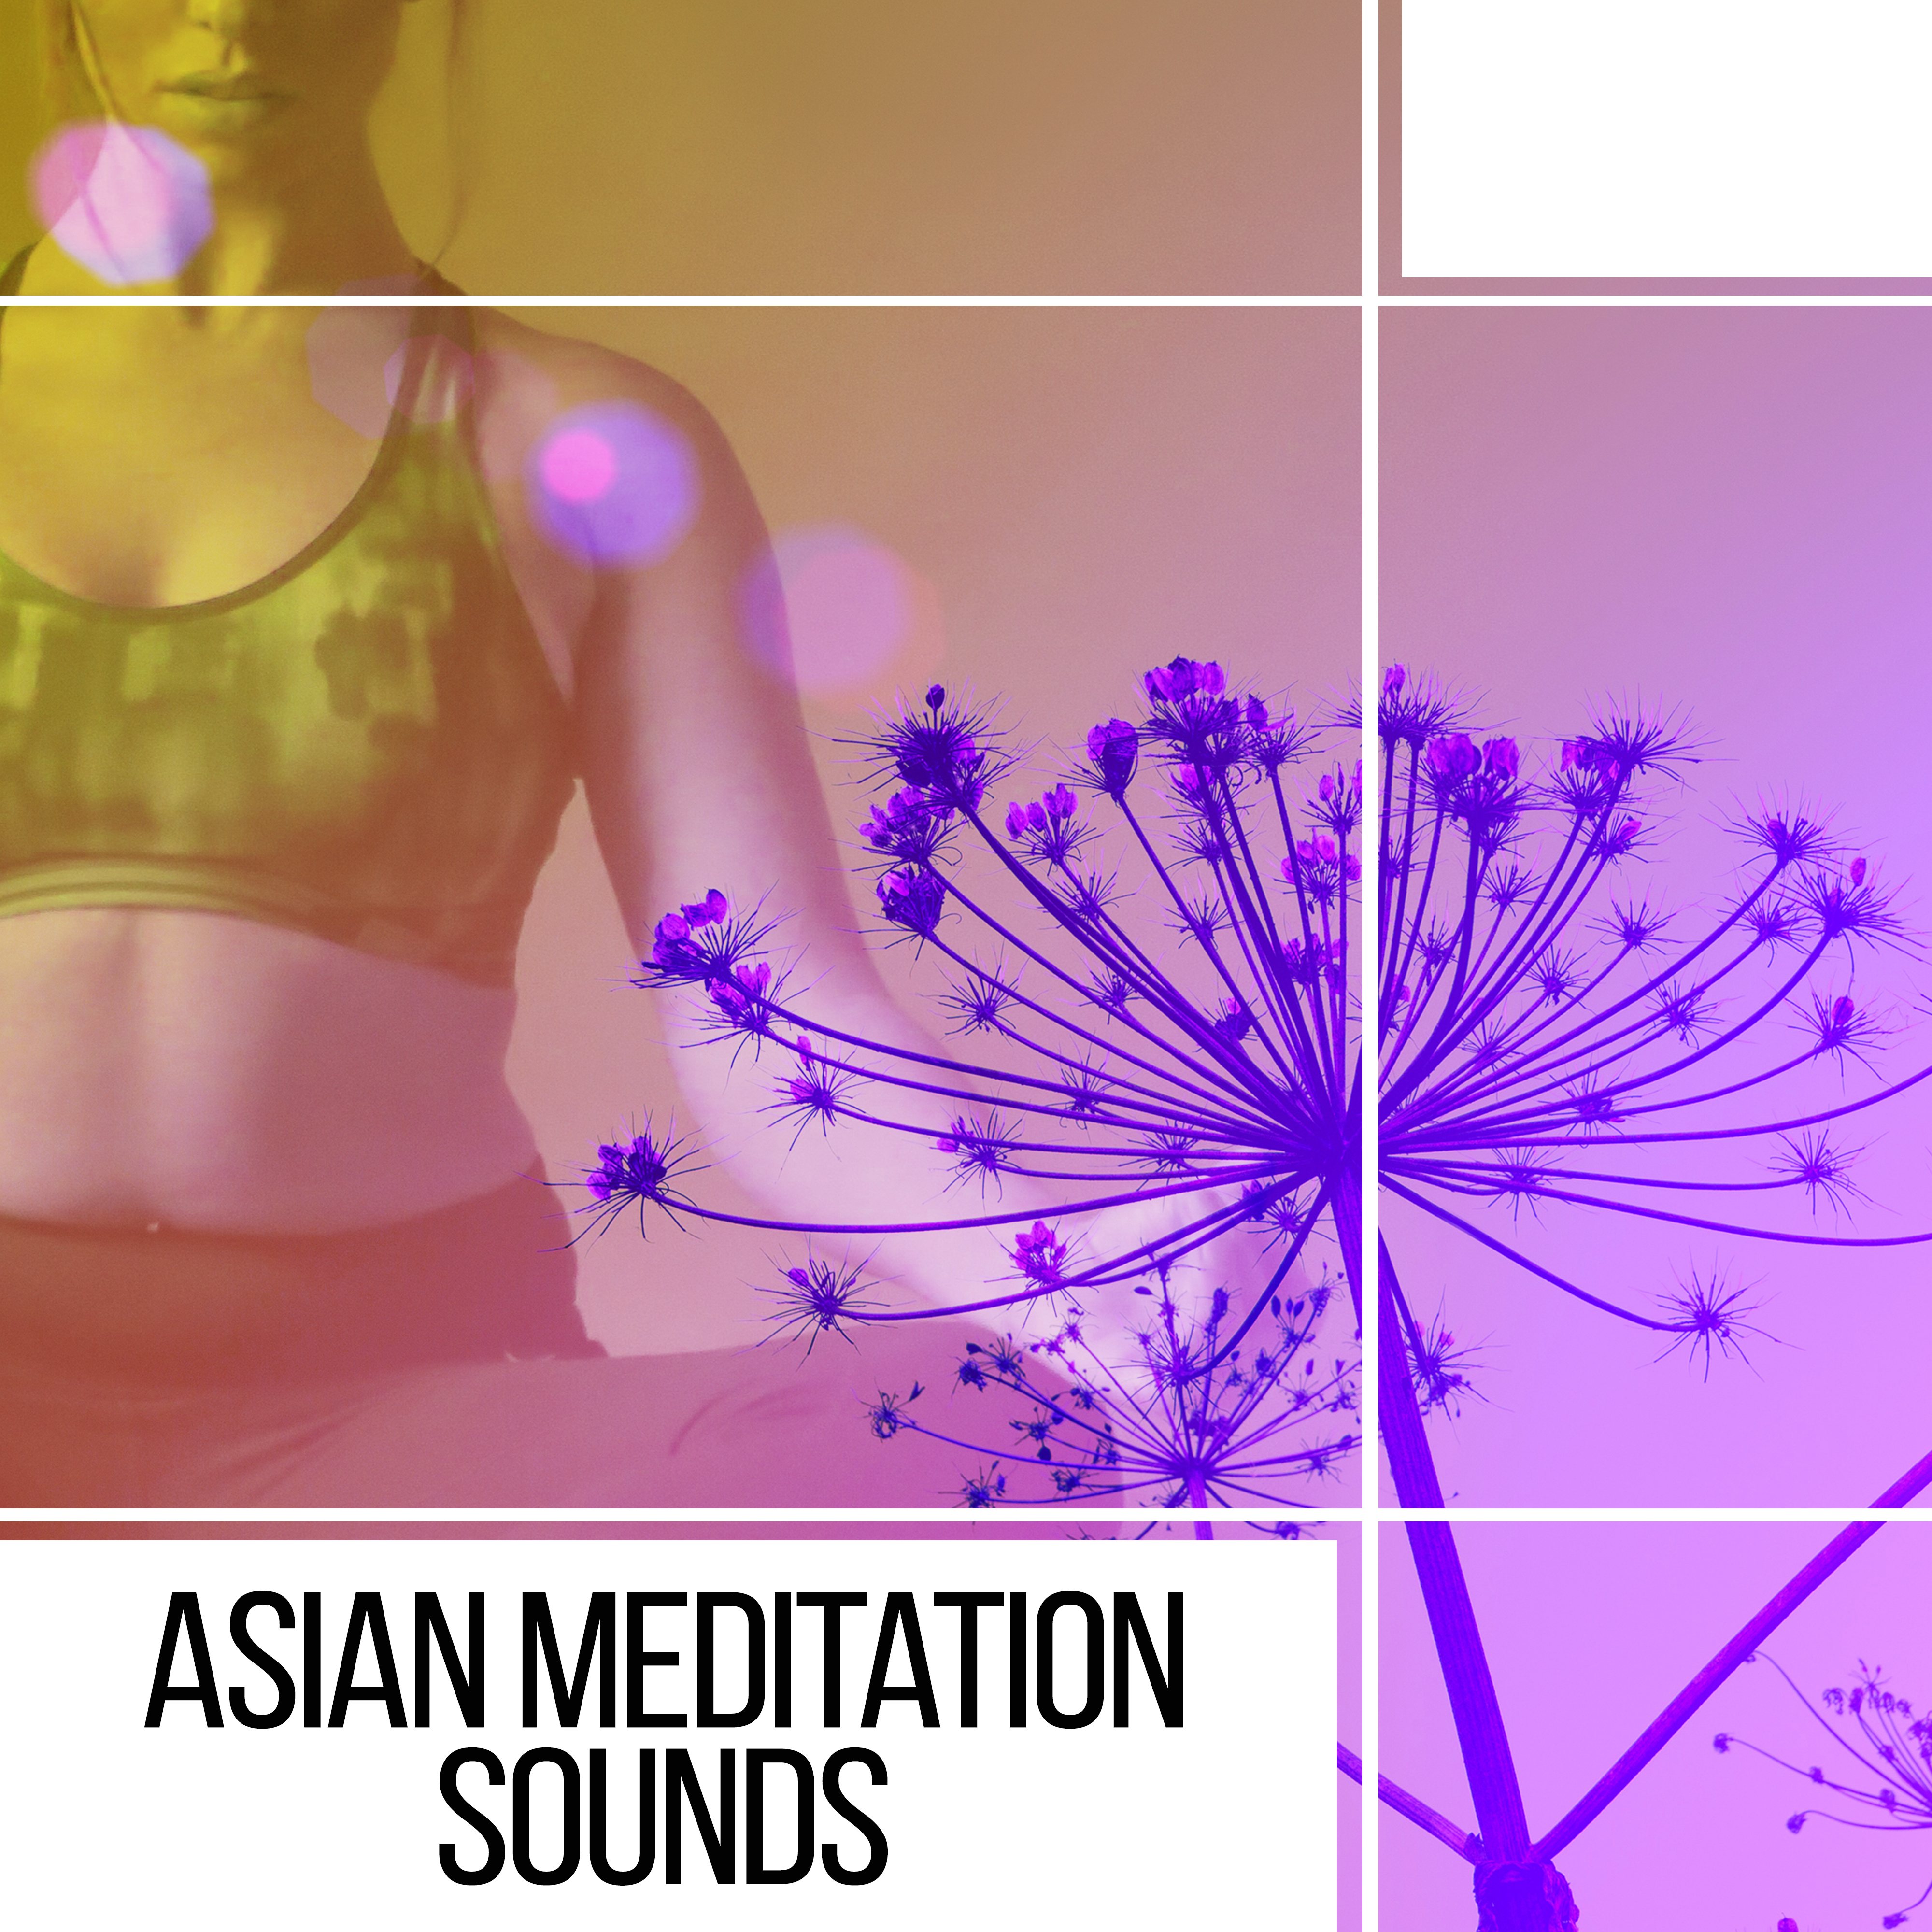 Asian Meditation Sounds  New Age Sounds to Meditate, Rest  Relax, Spirit Calmness, Soft Music